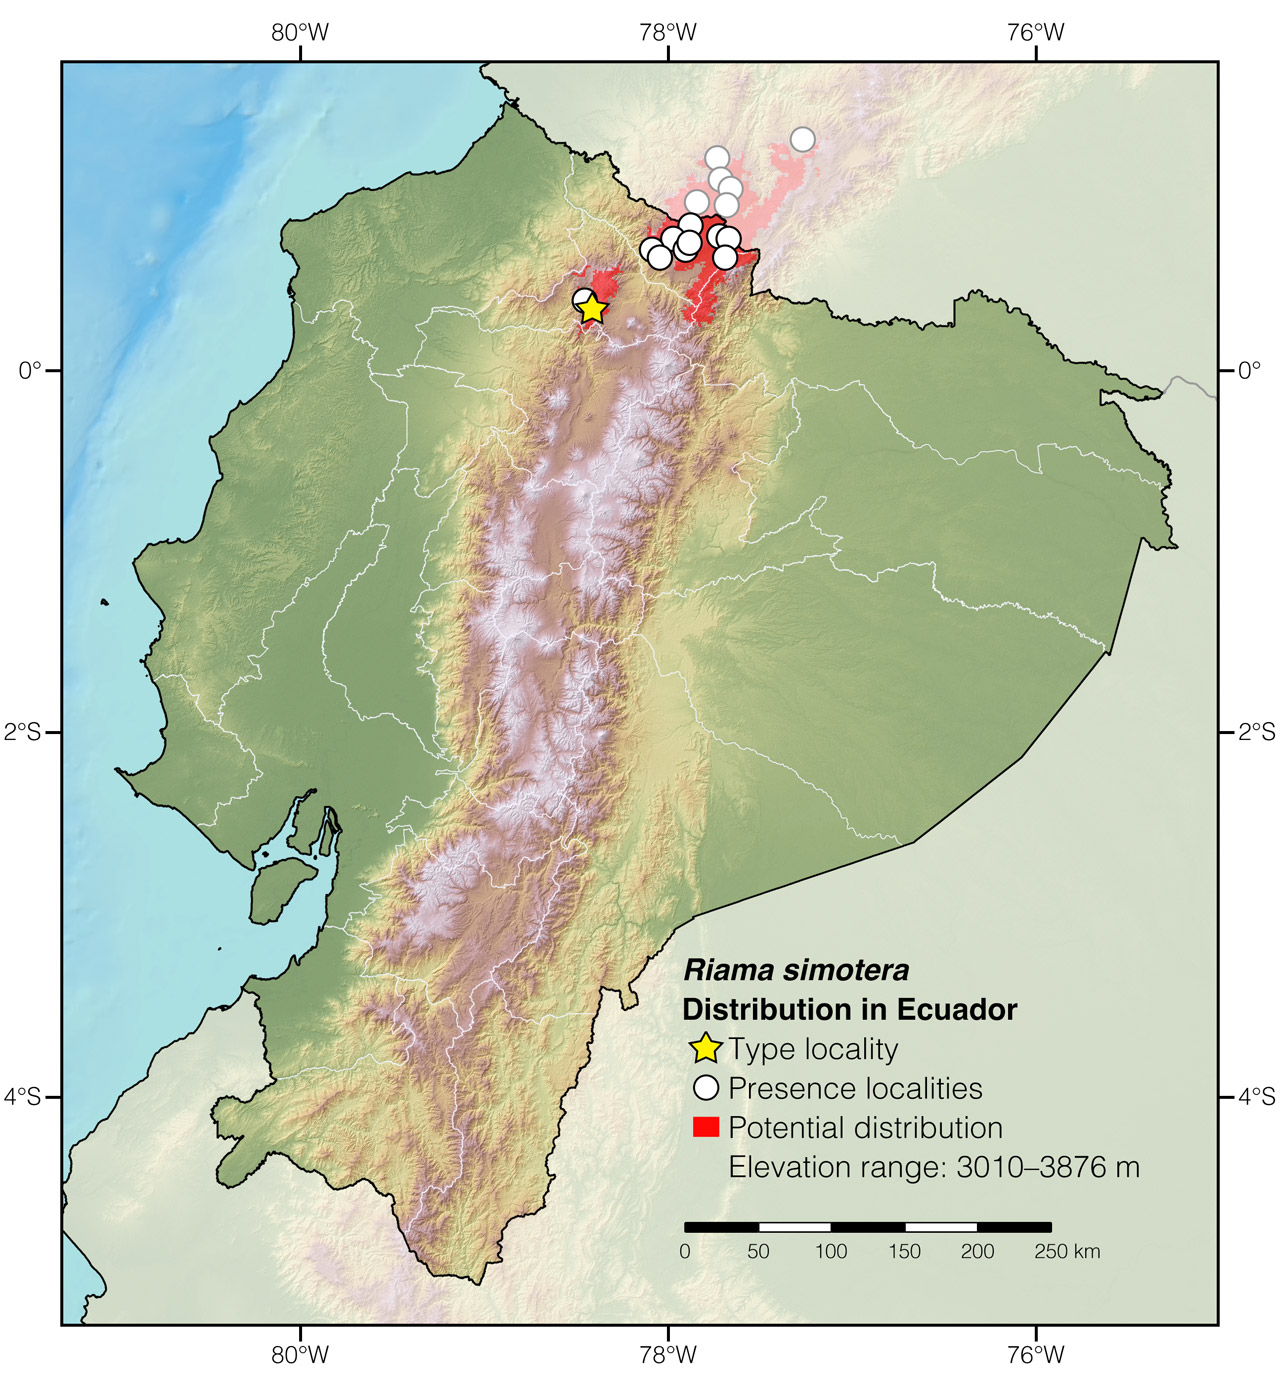 Distribution of Riama simotera in Ecuador